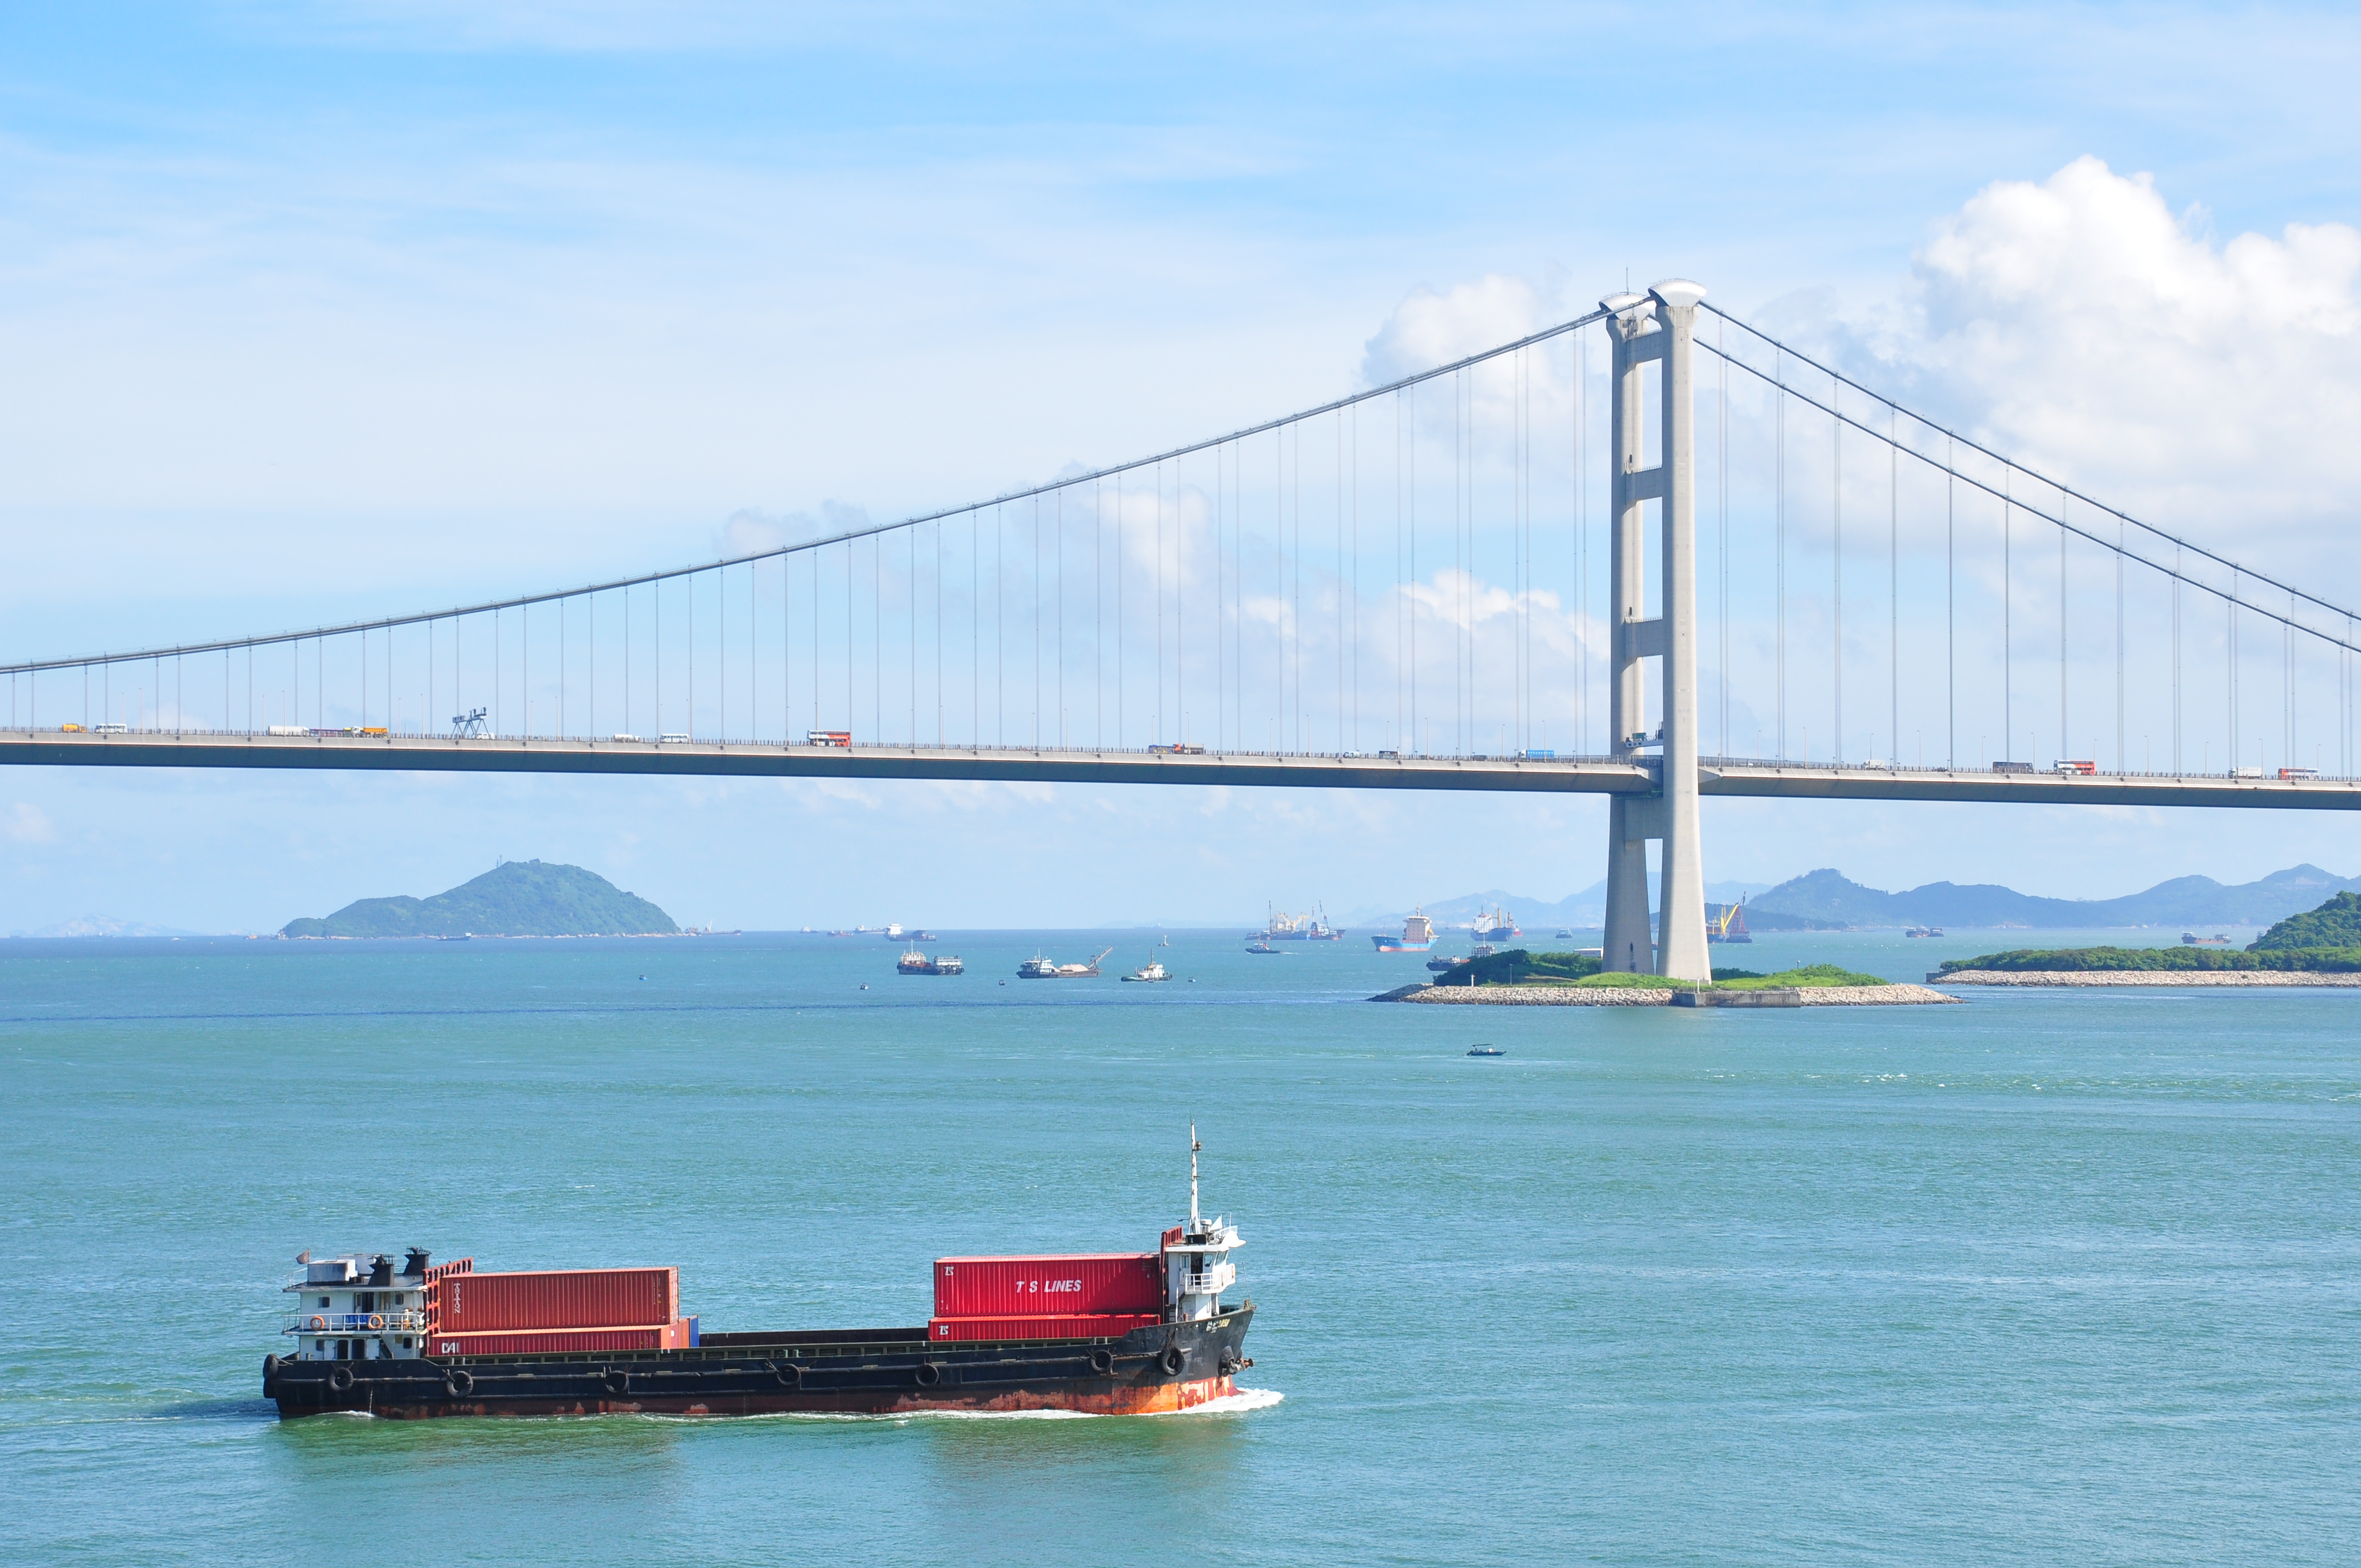 Tsing Ma Bridge and ship